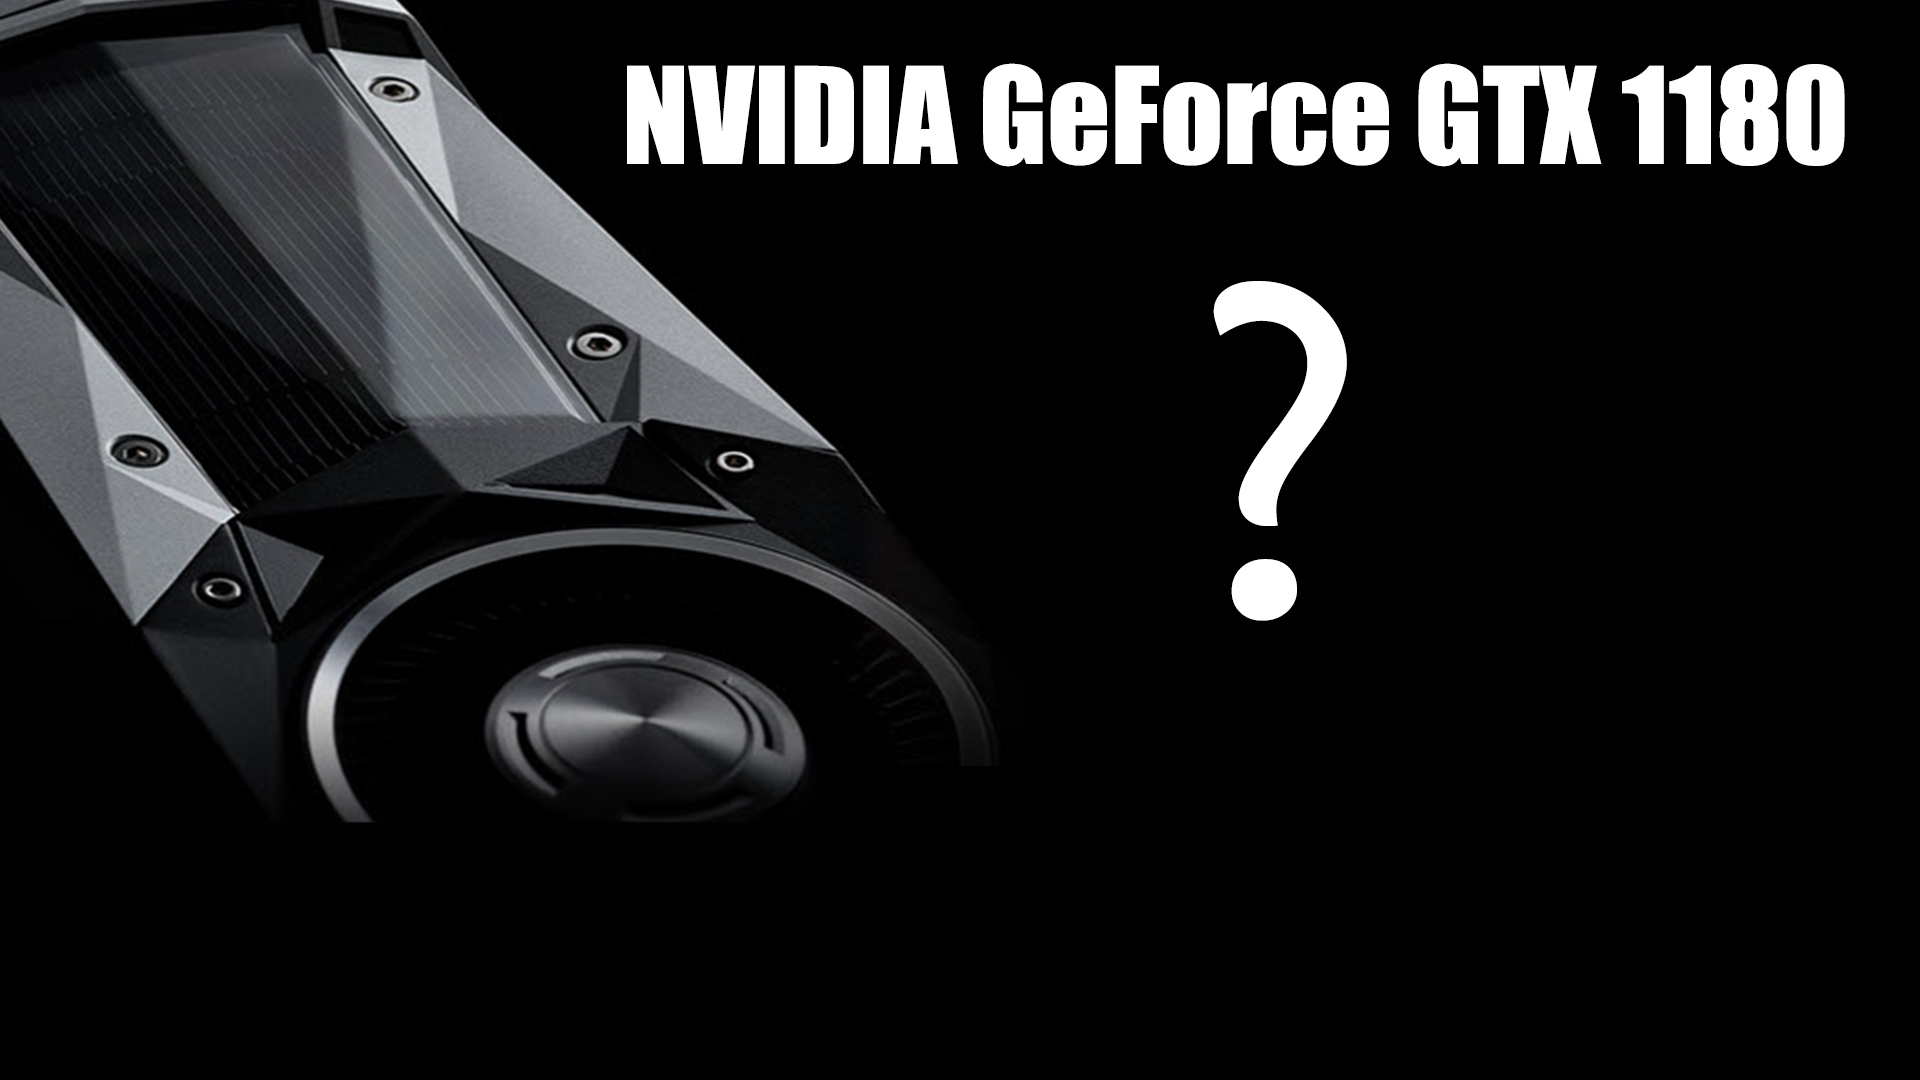 untitled 1 หลุดผลทดสอบ NVIDIA GeForce GTX 1180 จะมาจริงหรือไม่?